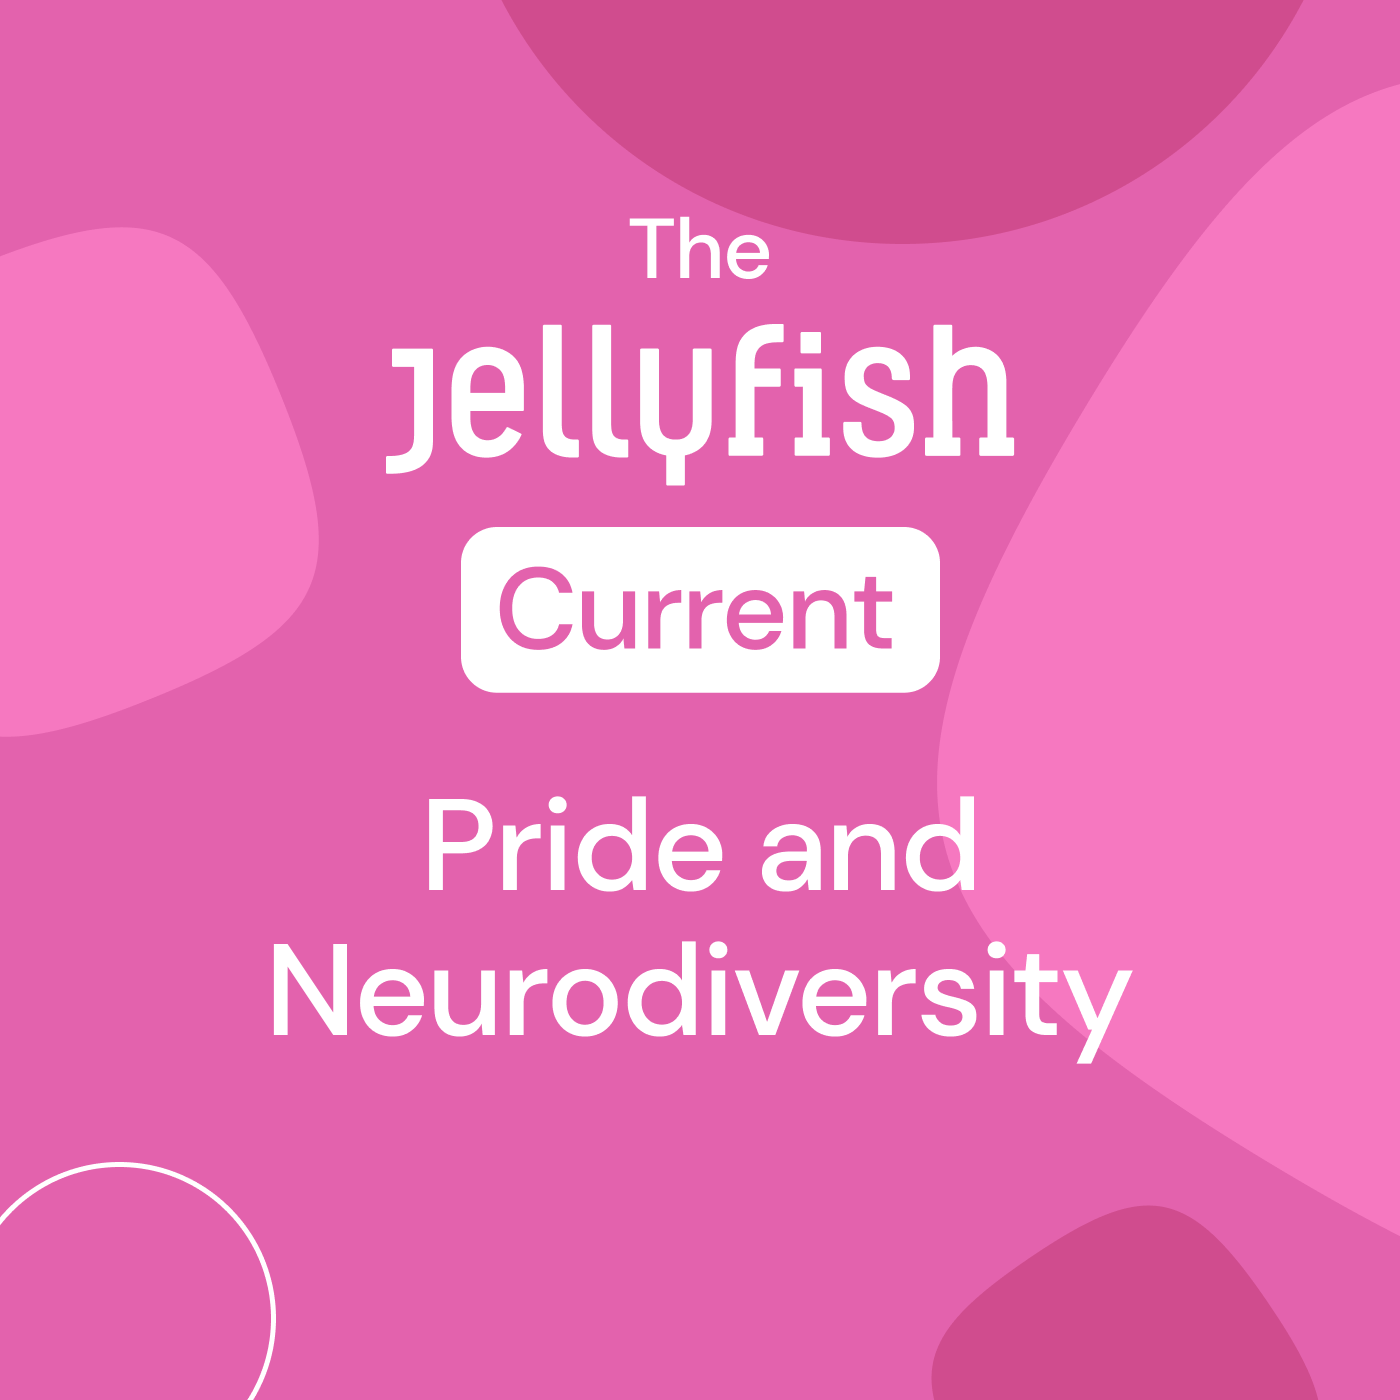 Pride and Neurodiversity